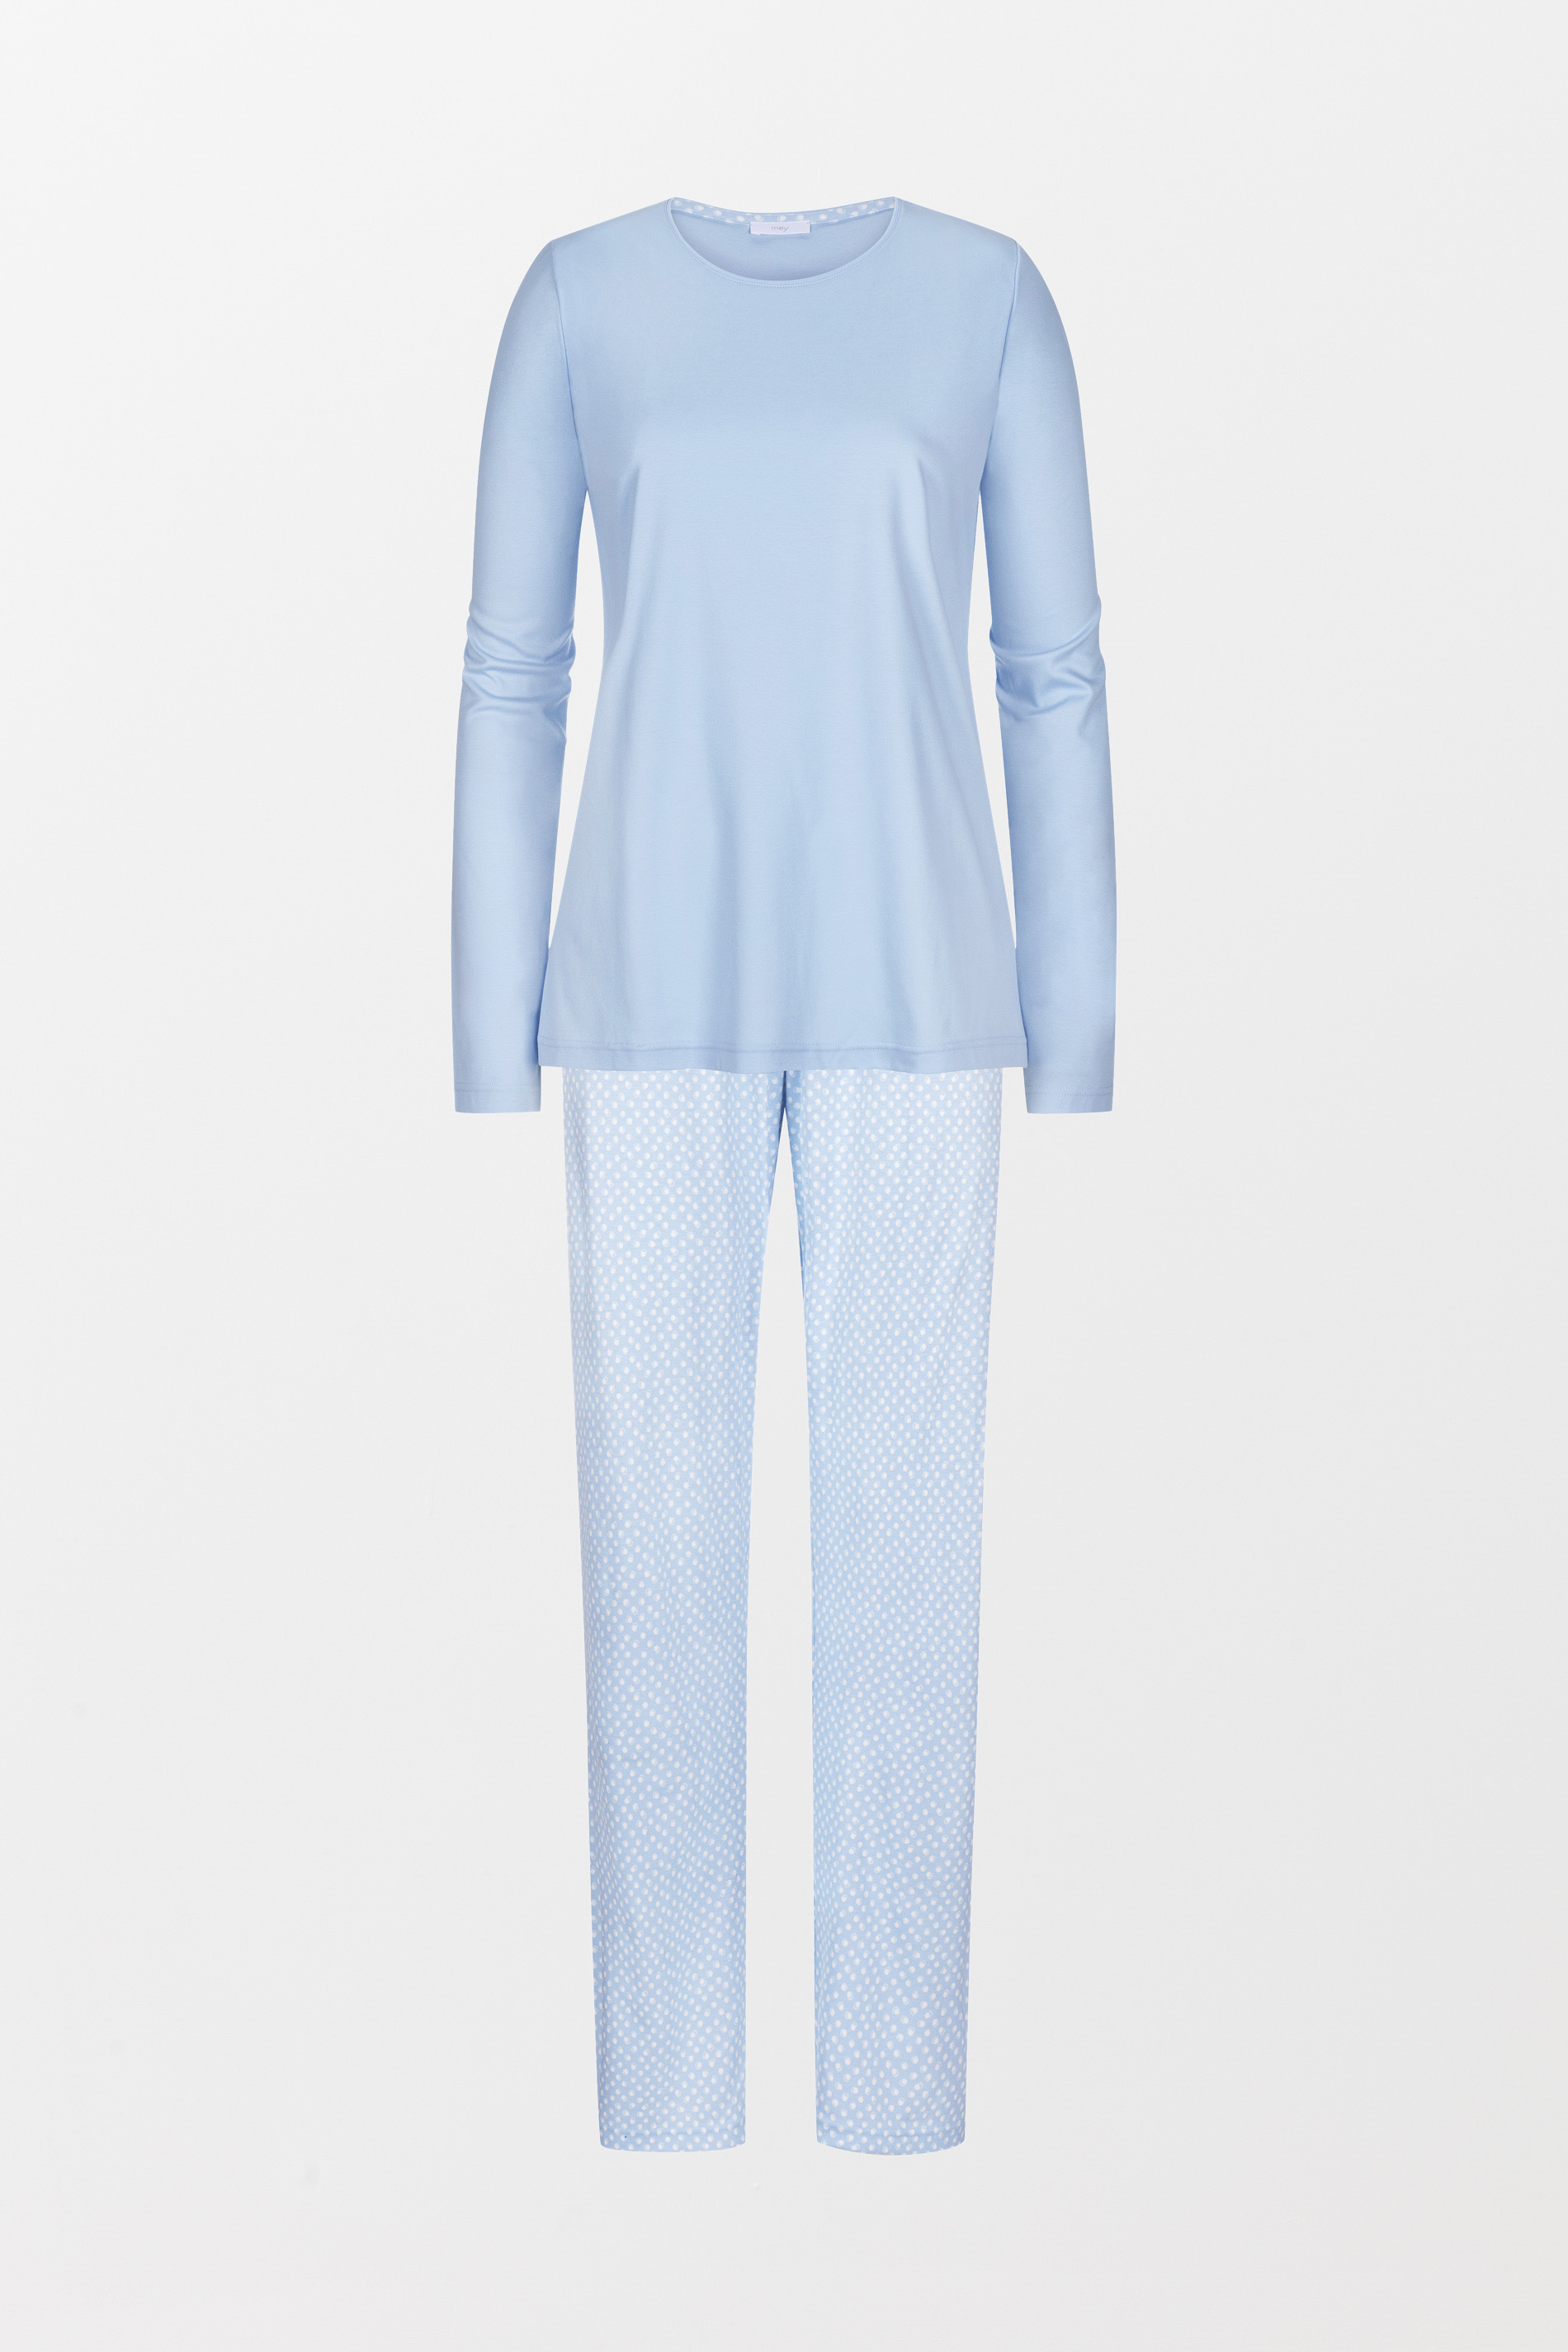 Schlafanzug Dream Blue Serie Emelie Freisteller | mey®